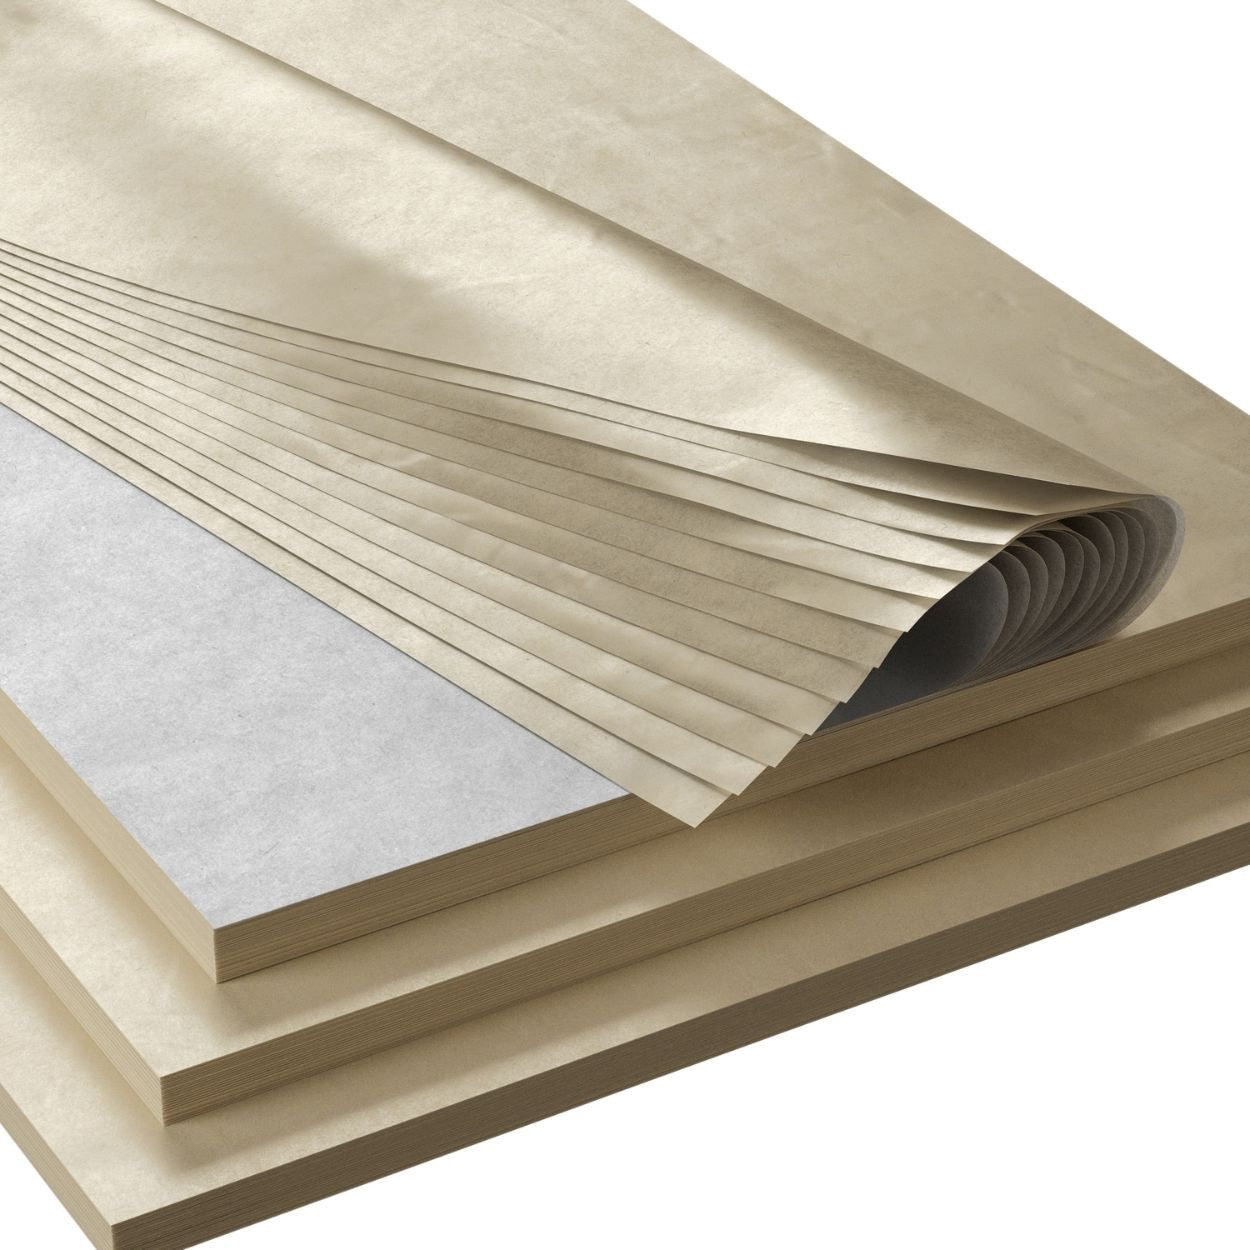 EGP Solid Tissue Paper 20 x 30 (Khaki), 480 Sheets